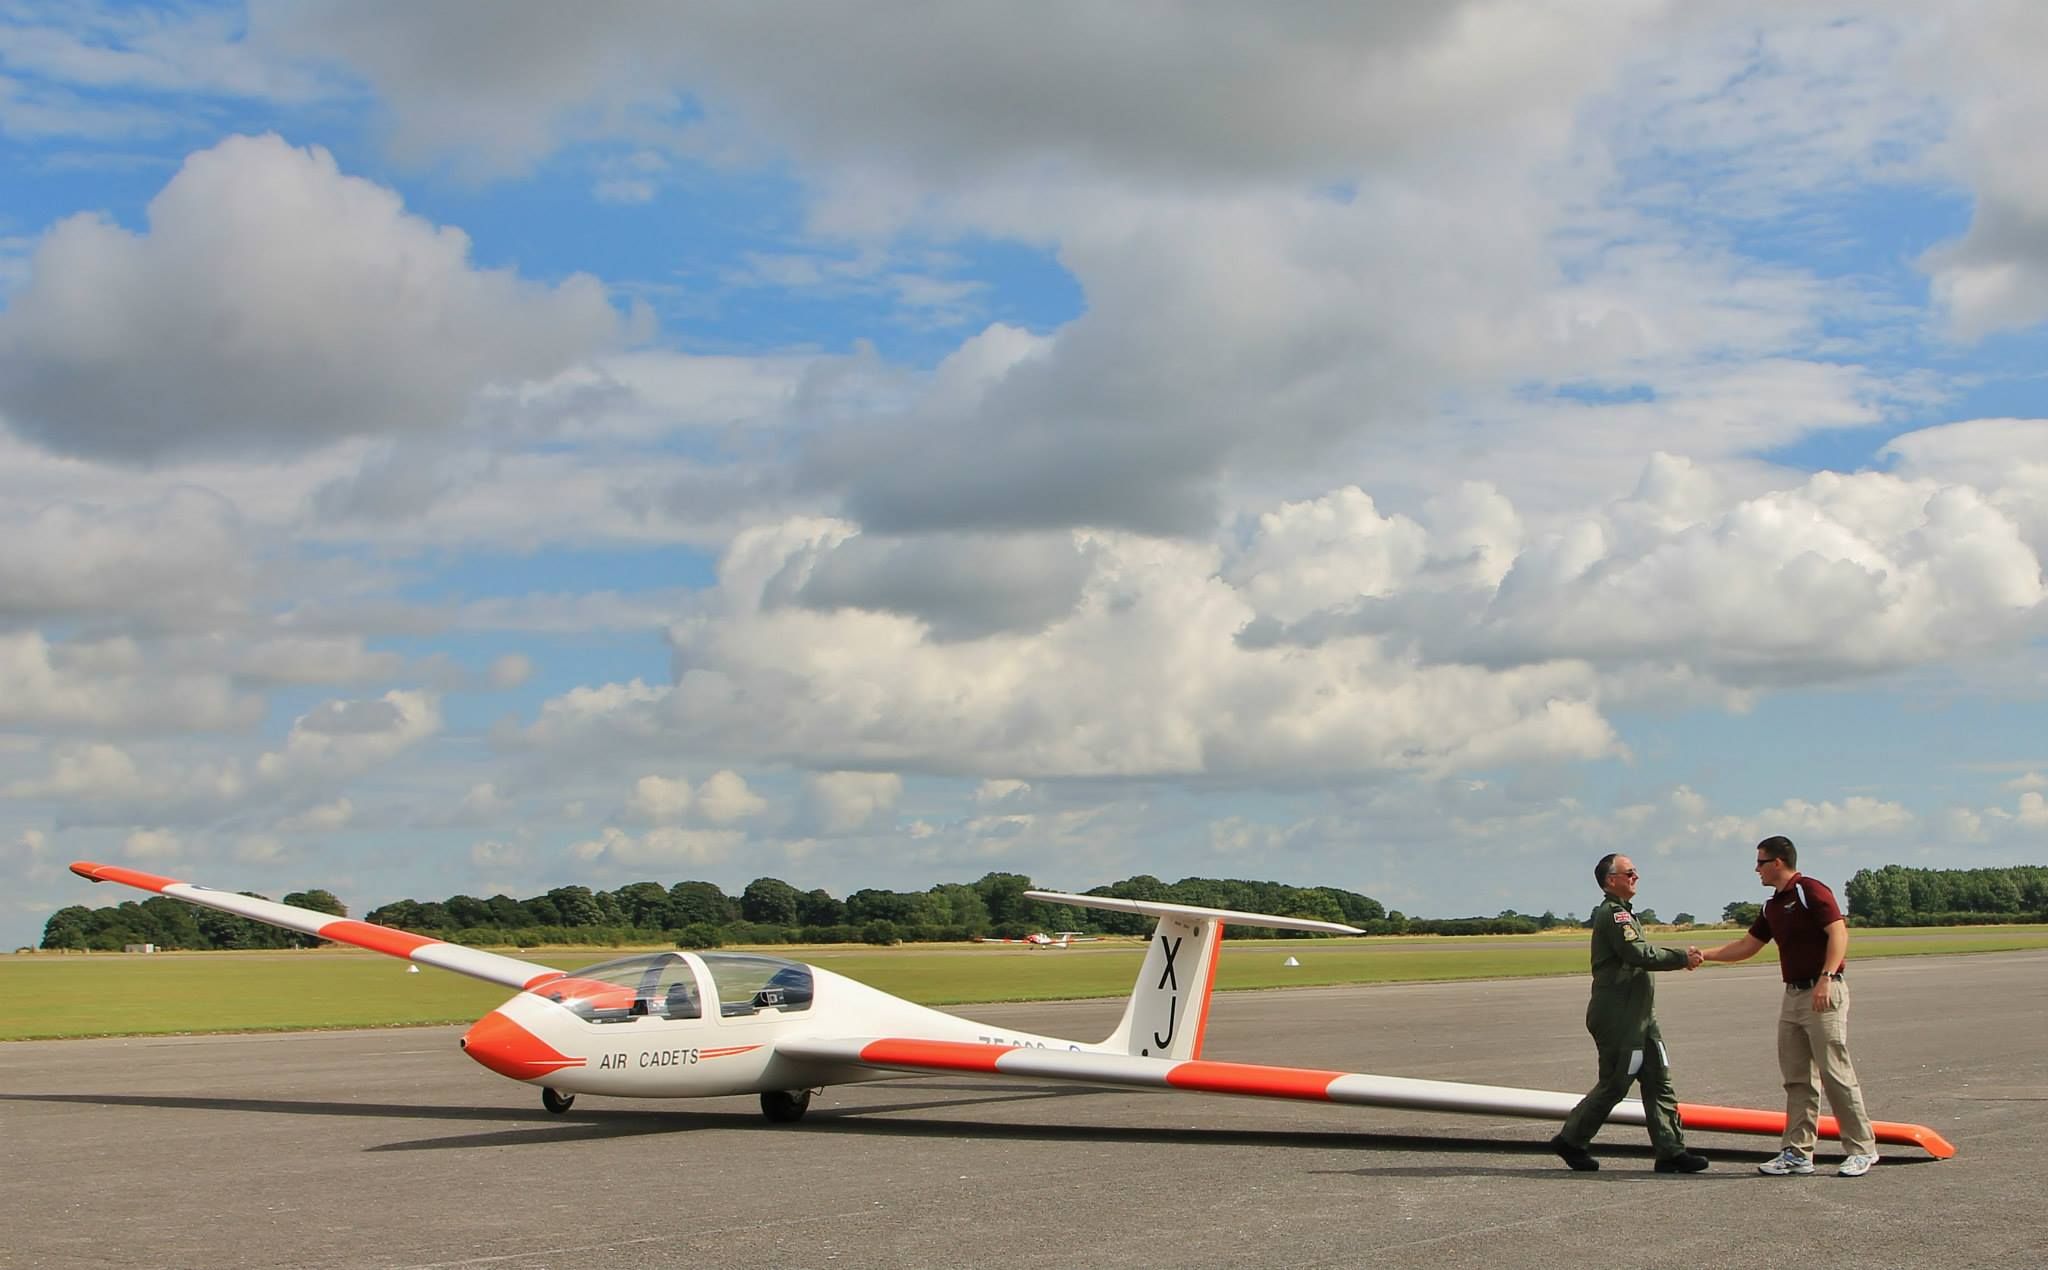 An International Air Cadet Exchange member boards an RAF Air Cadets Glider.